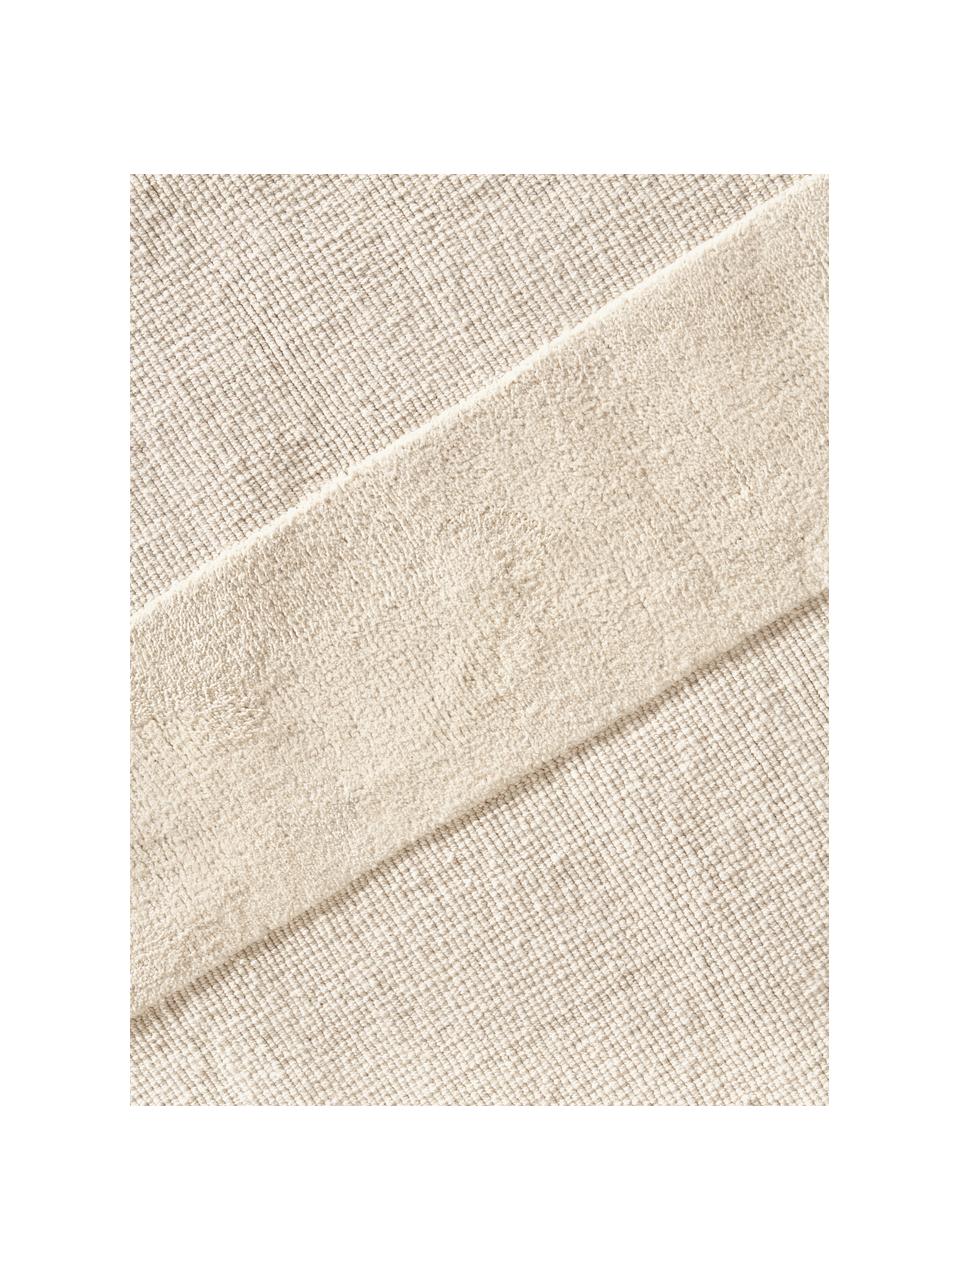 Alfombra artesanal de algodón texturizada Dania, 100% algodón, Blanco crema, An 200 x L 300 cm (Tamaño L)